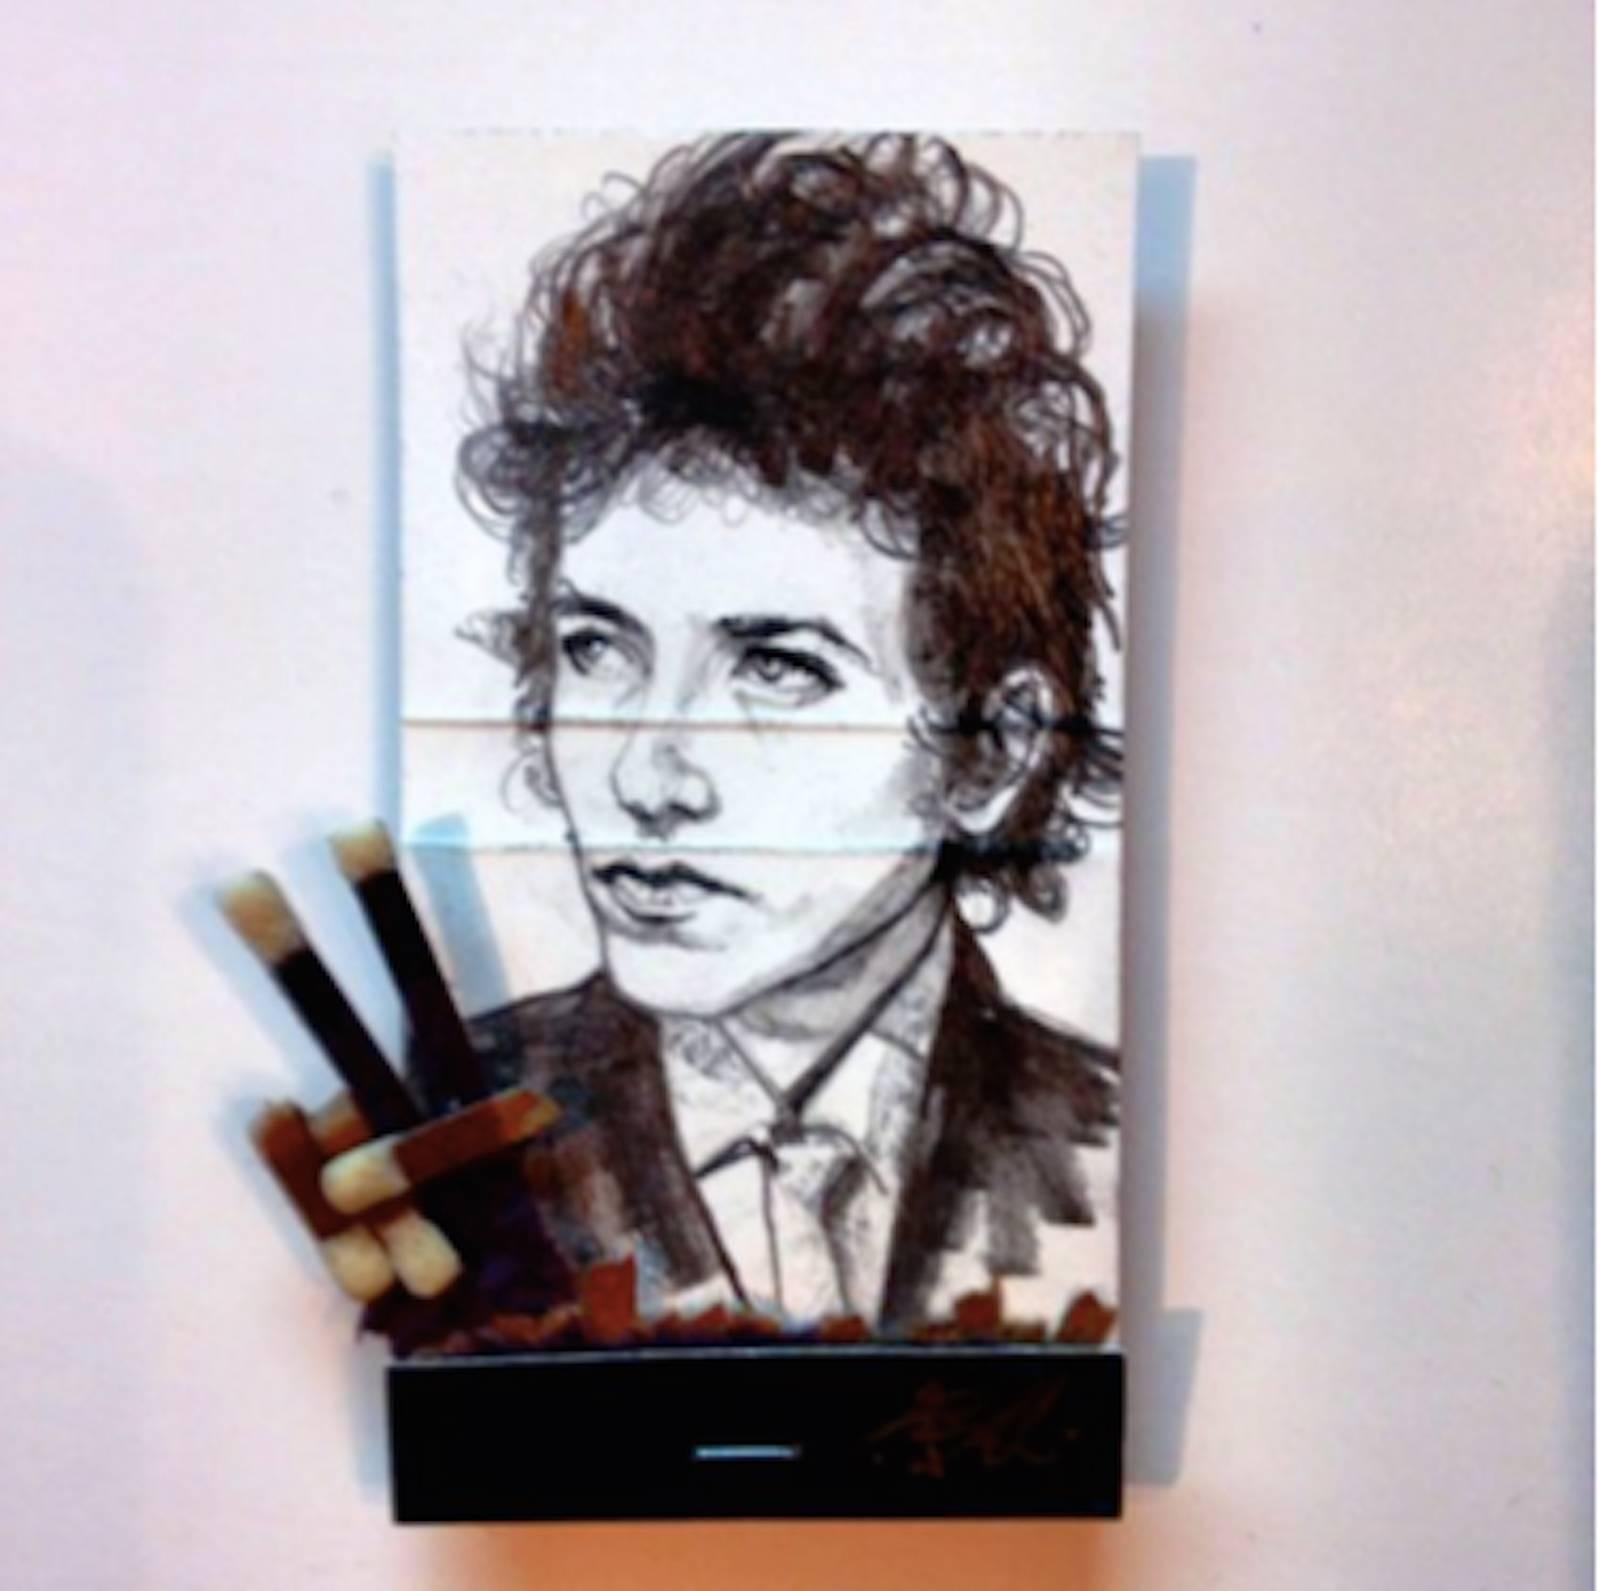 MB visual Portrait - Bob Dylan- black and white figurative portrait on matchbox